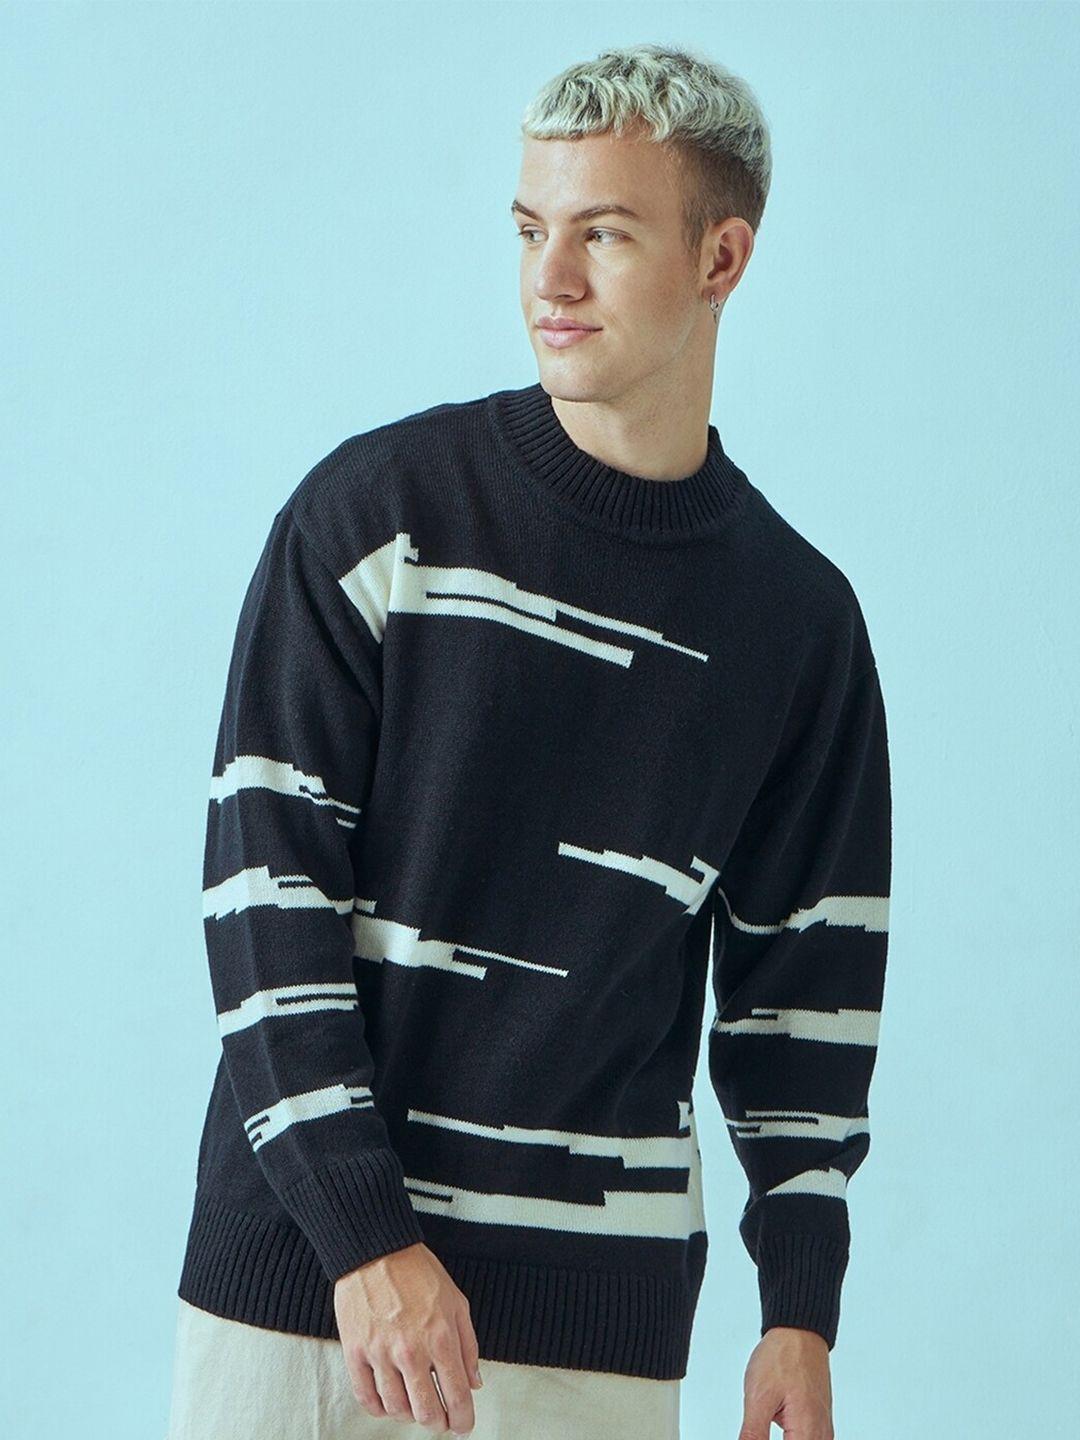 bewakoof-all-over-printed-flatknit-sweater